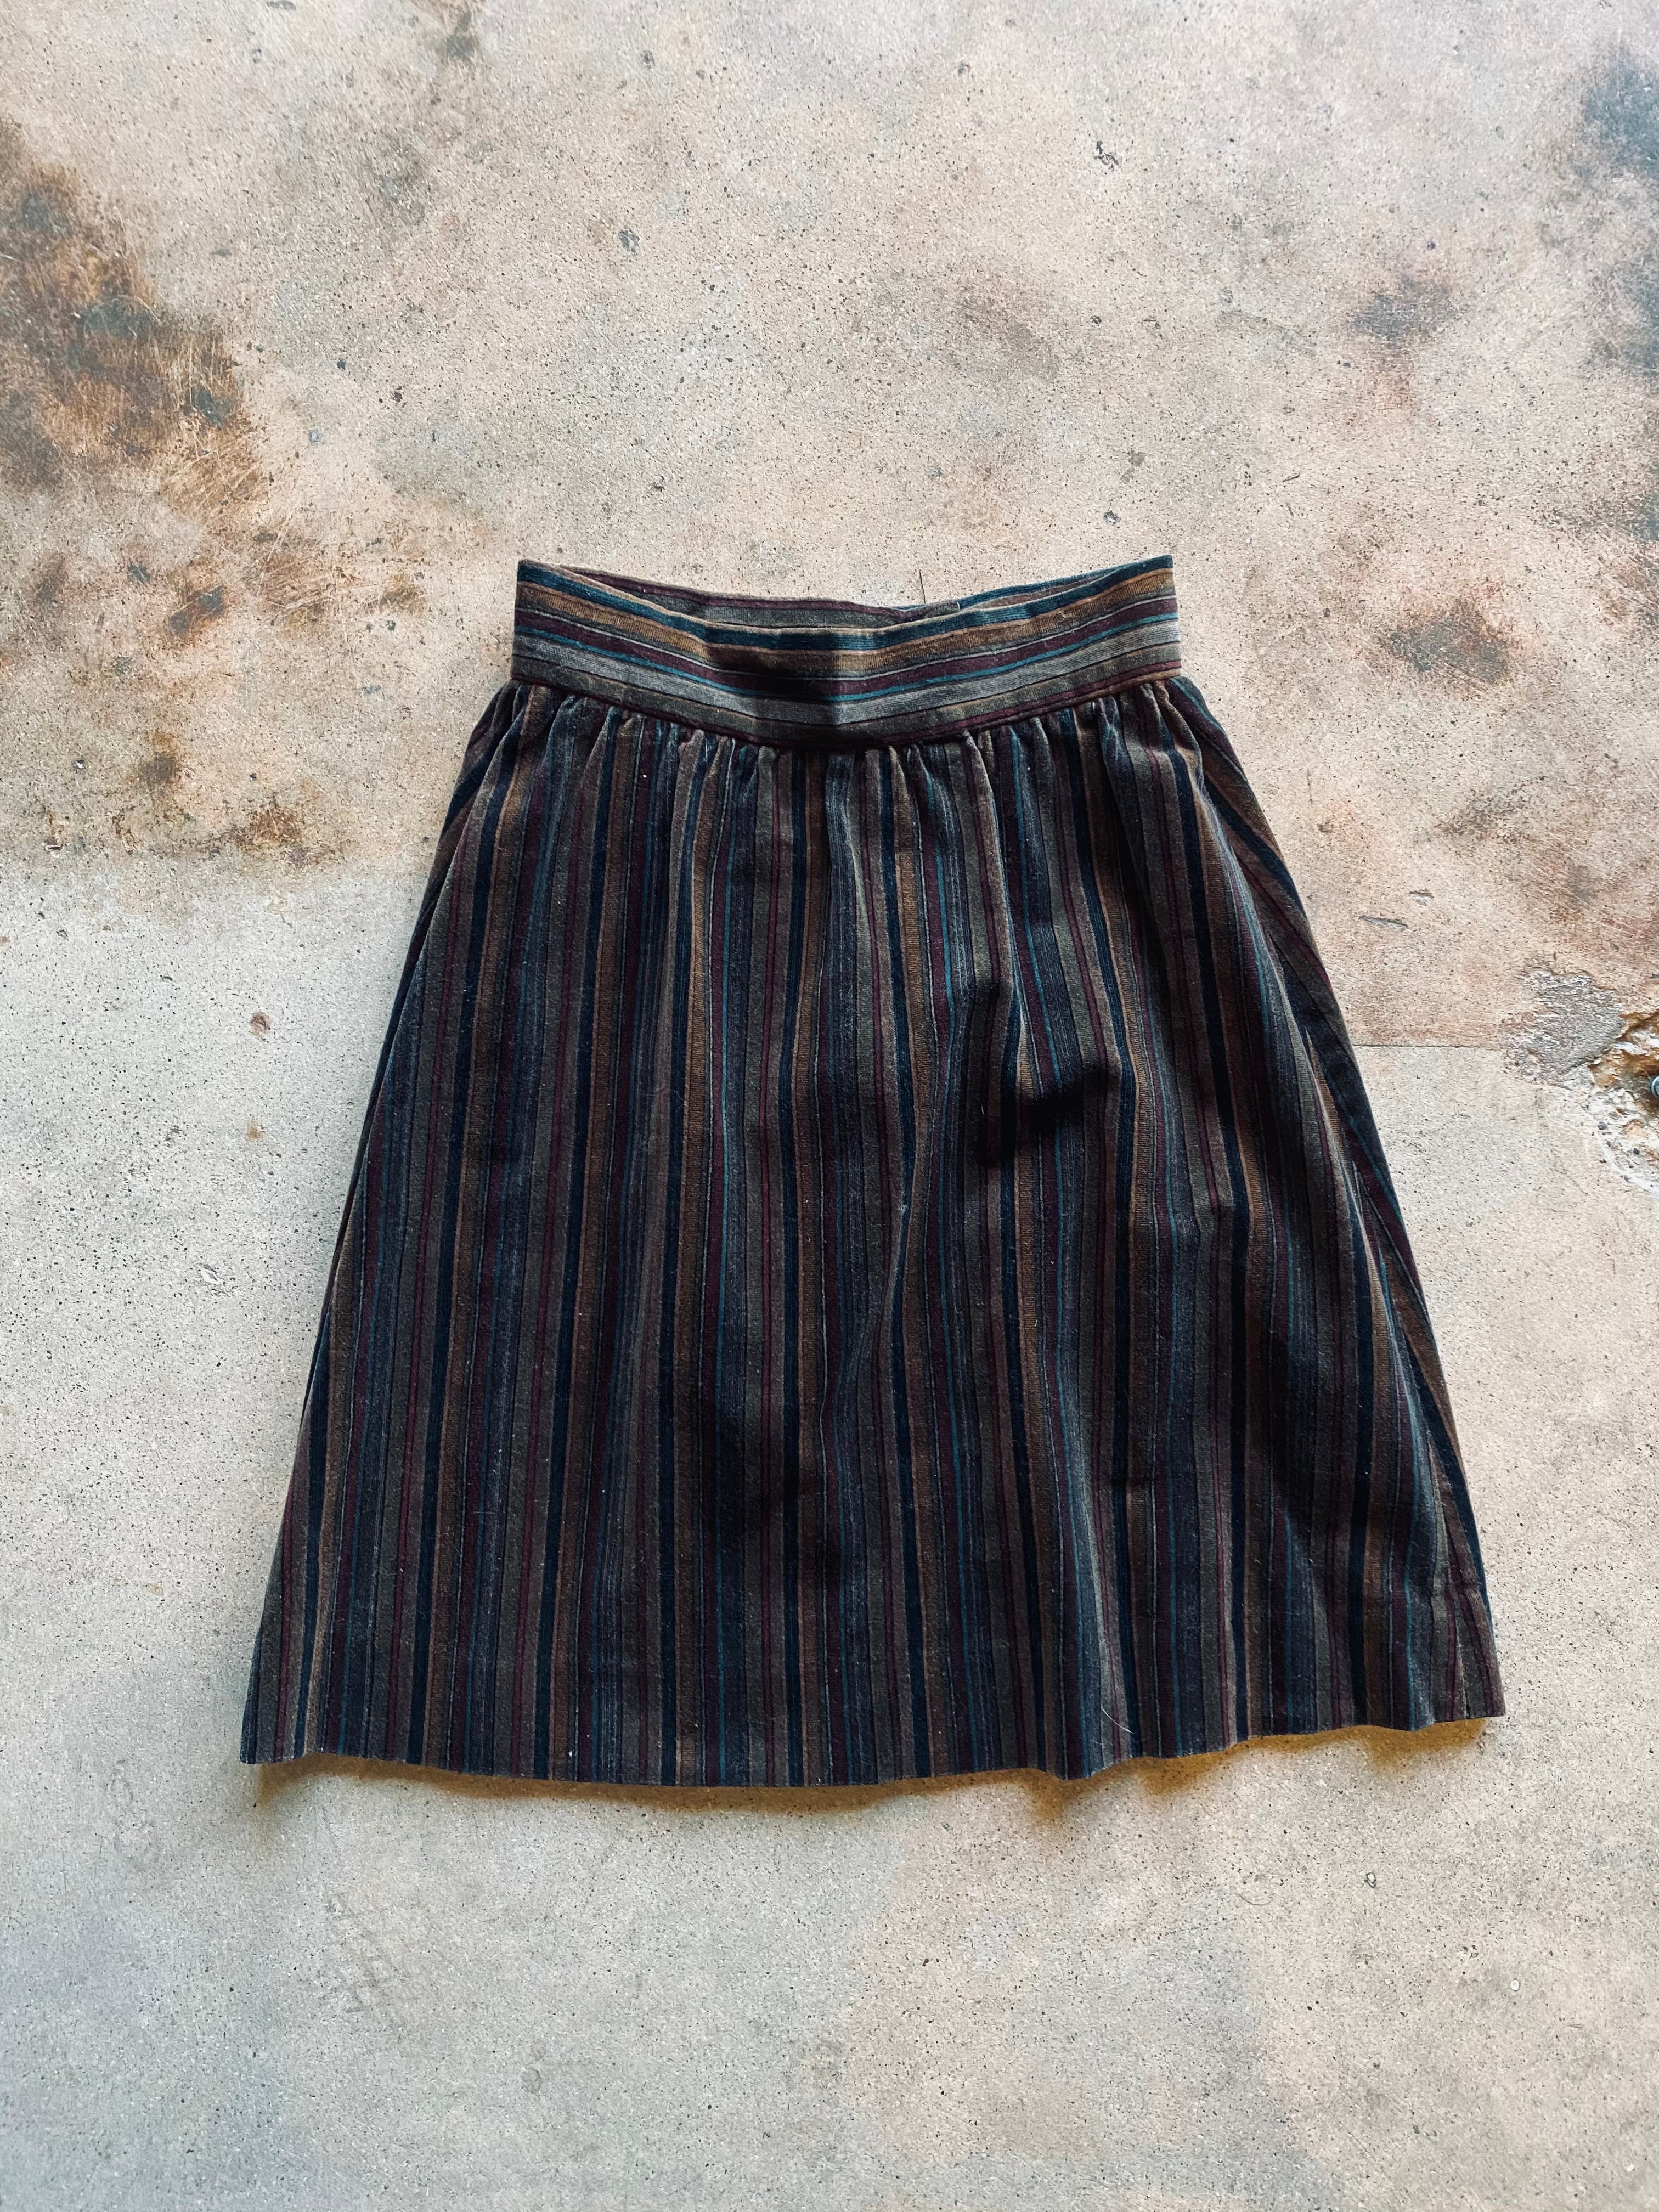 1980s Striped A-Line Skirt